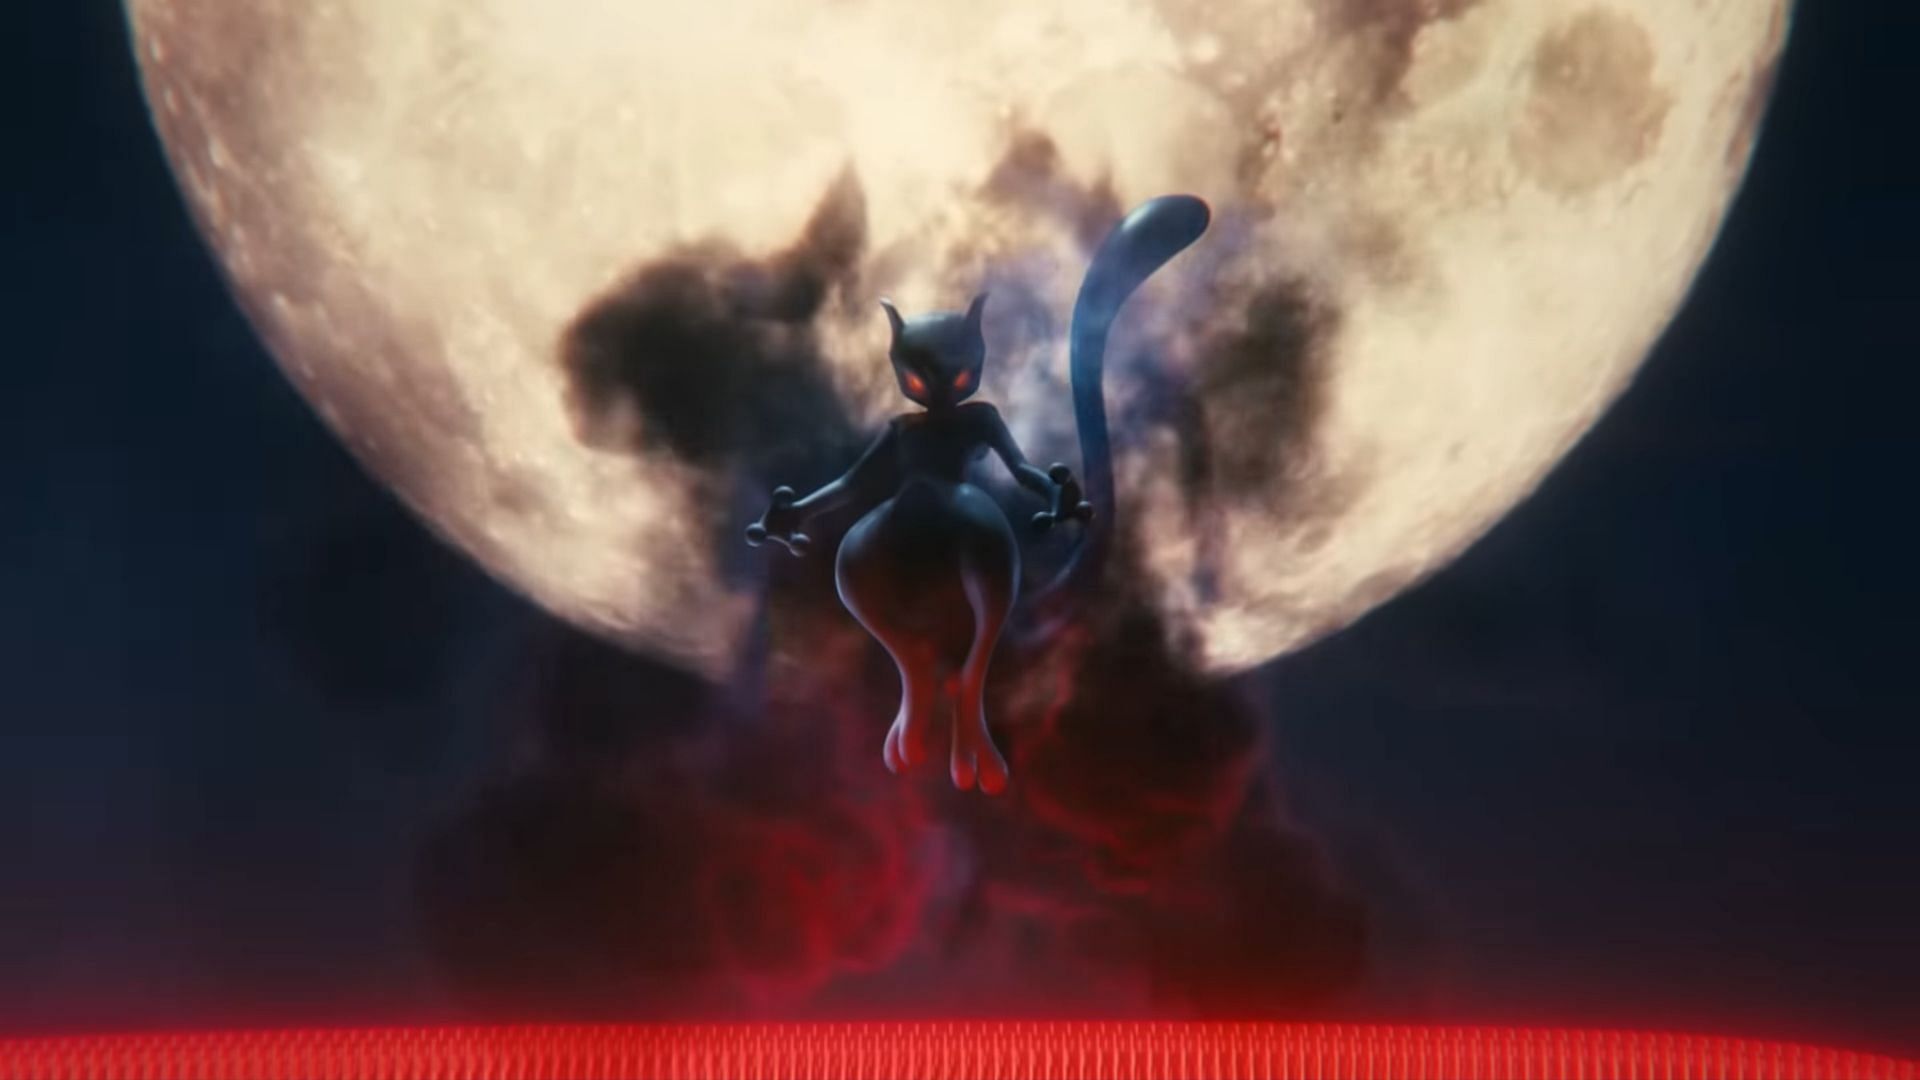 Shadow Mewtwo's Return: The Legendary Shadow's Legacy